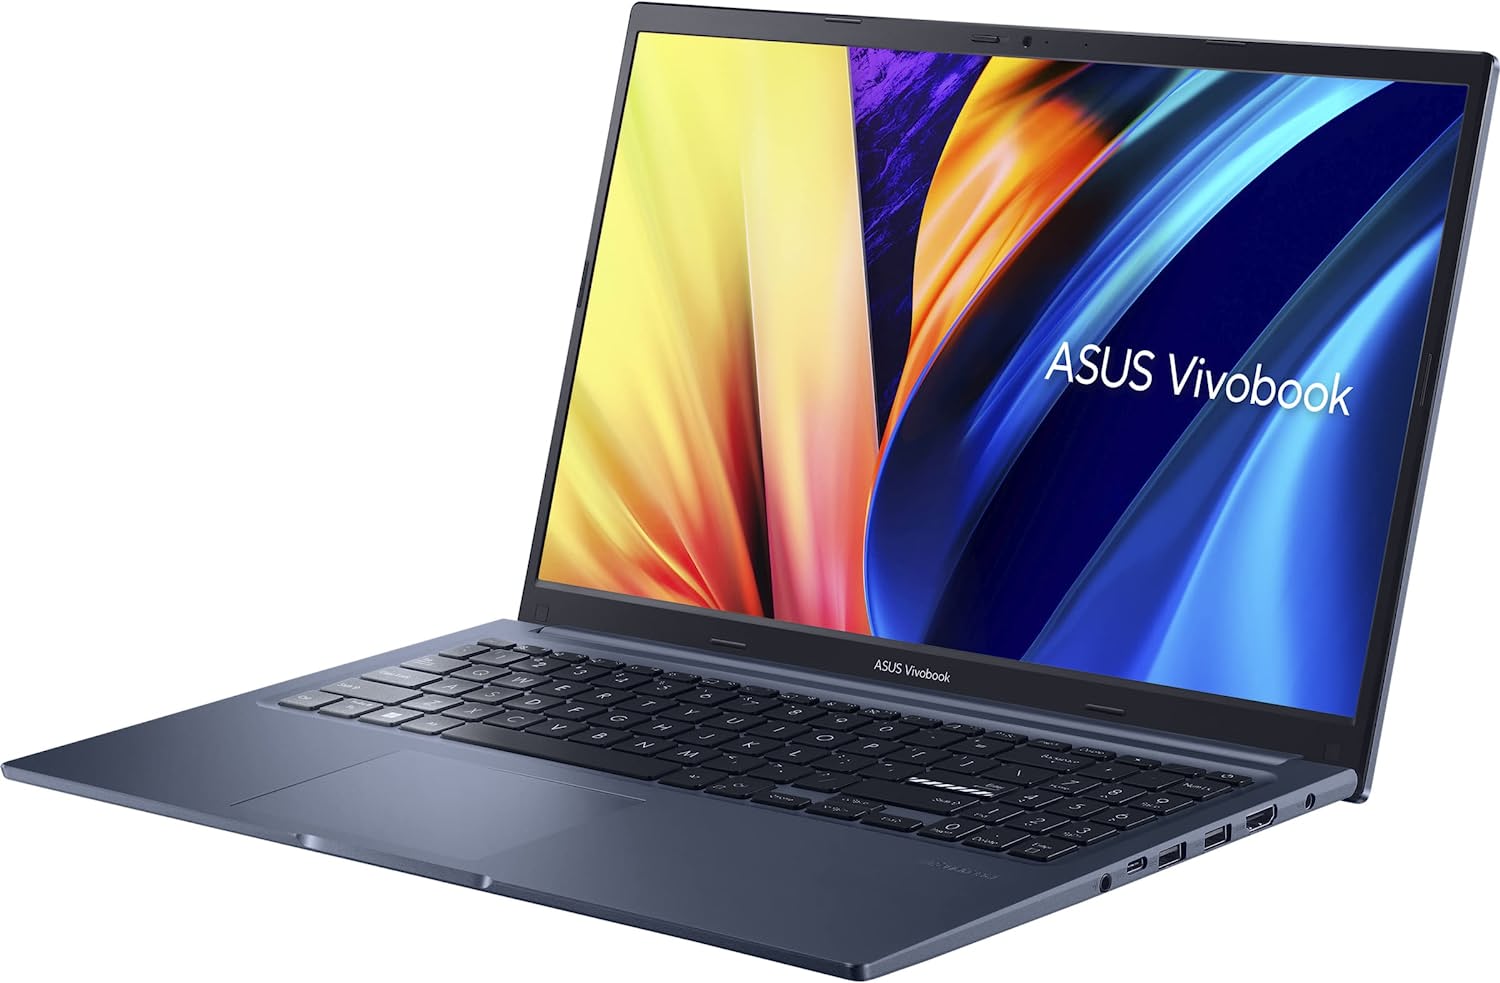 ASUS L410 MA-DB02 Ultra Thin Laptop, 14” FHD Display, Intel Celeron N4020 Processor, 4GB RAM, 64GB Storage, NumberPad, Windows 10 Home in S Mode,